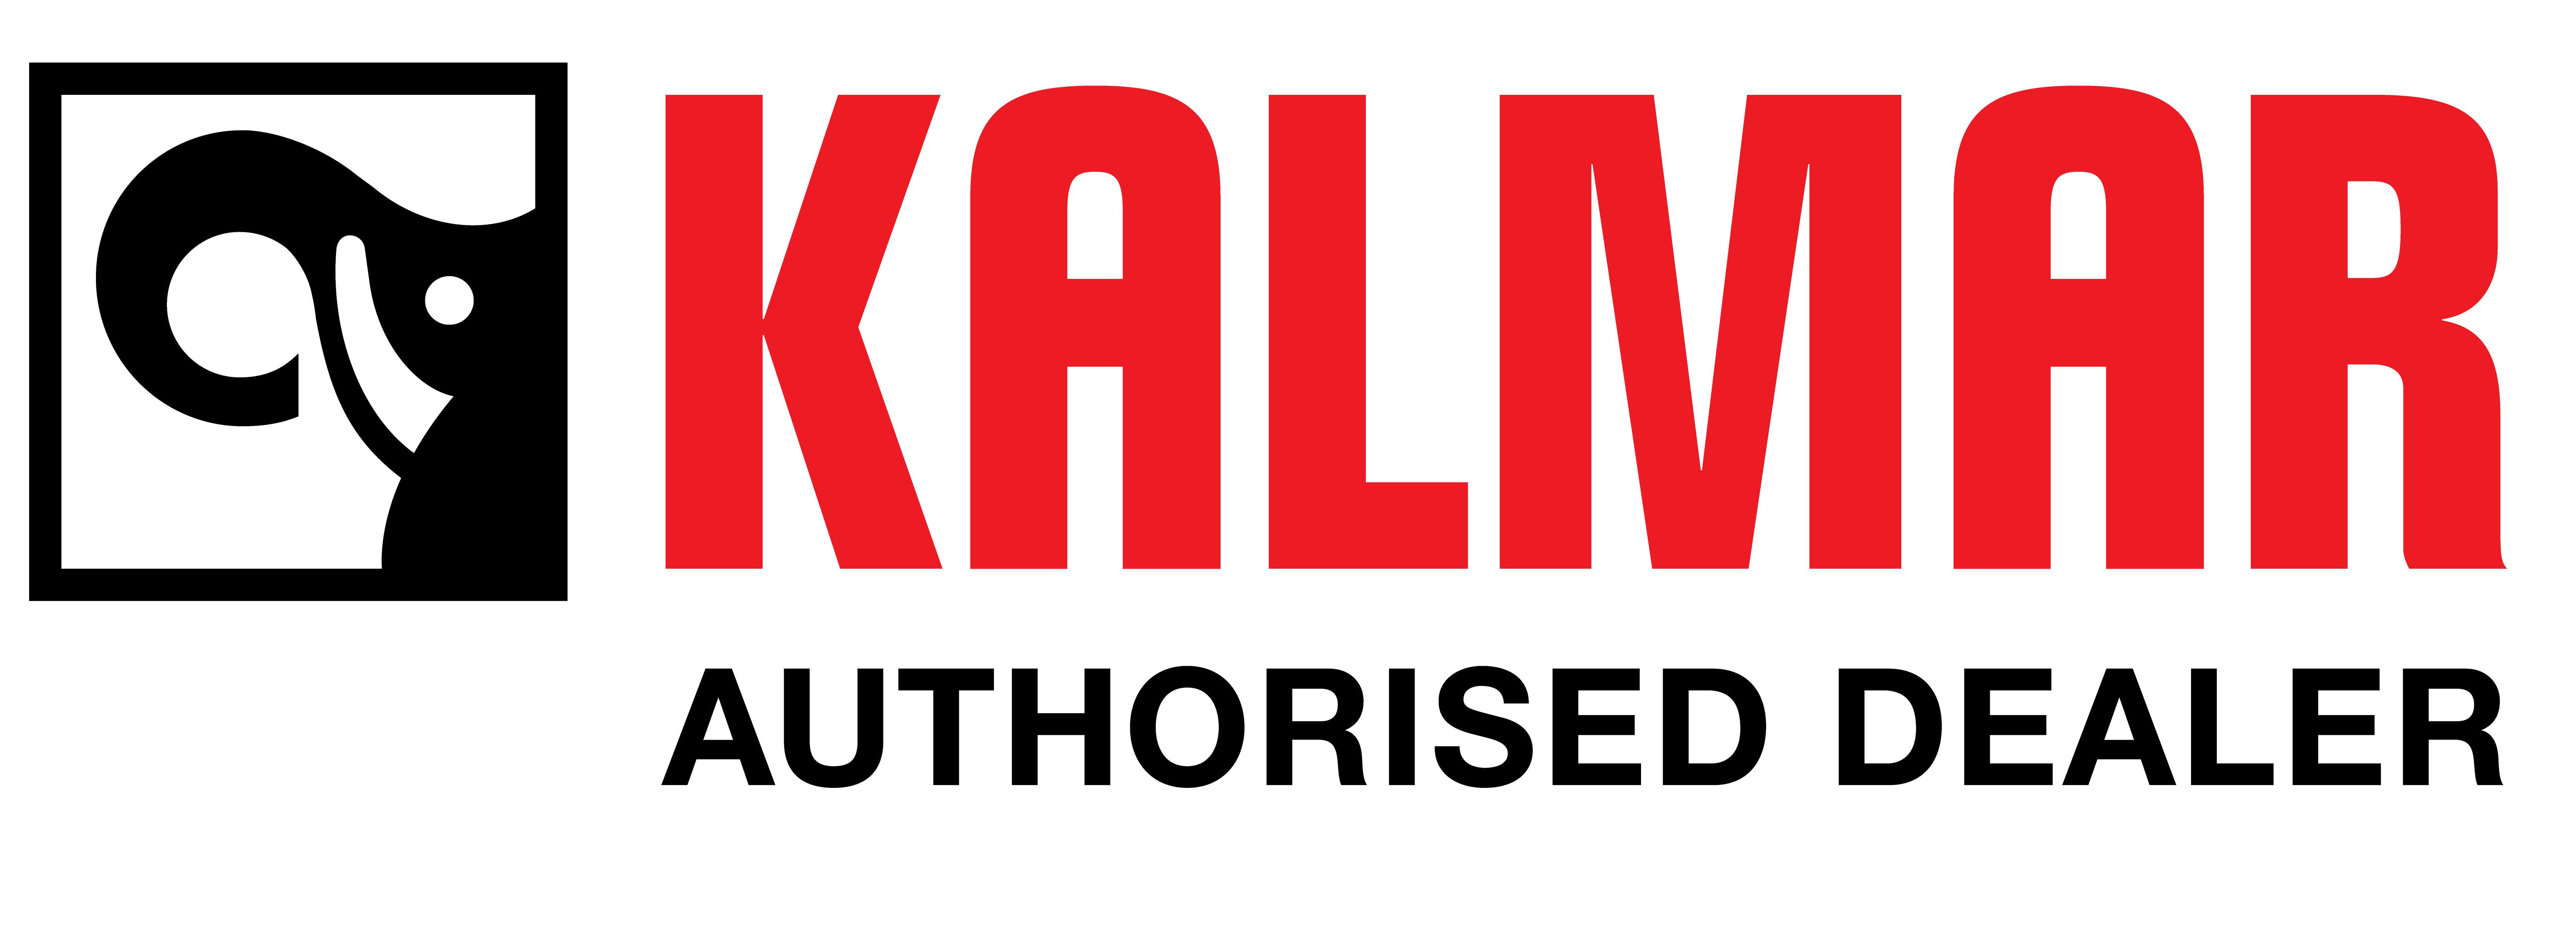 Kalmar_Dealer_Horizontal_Black-02 (1)